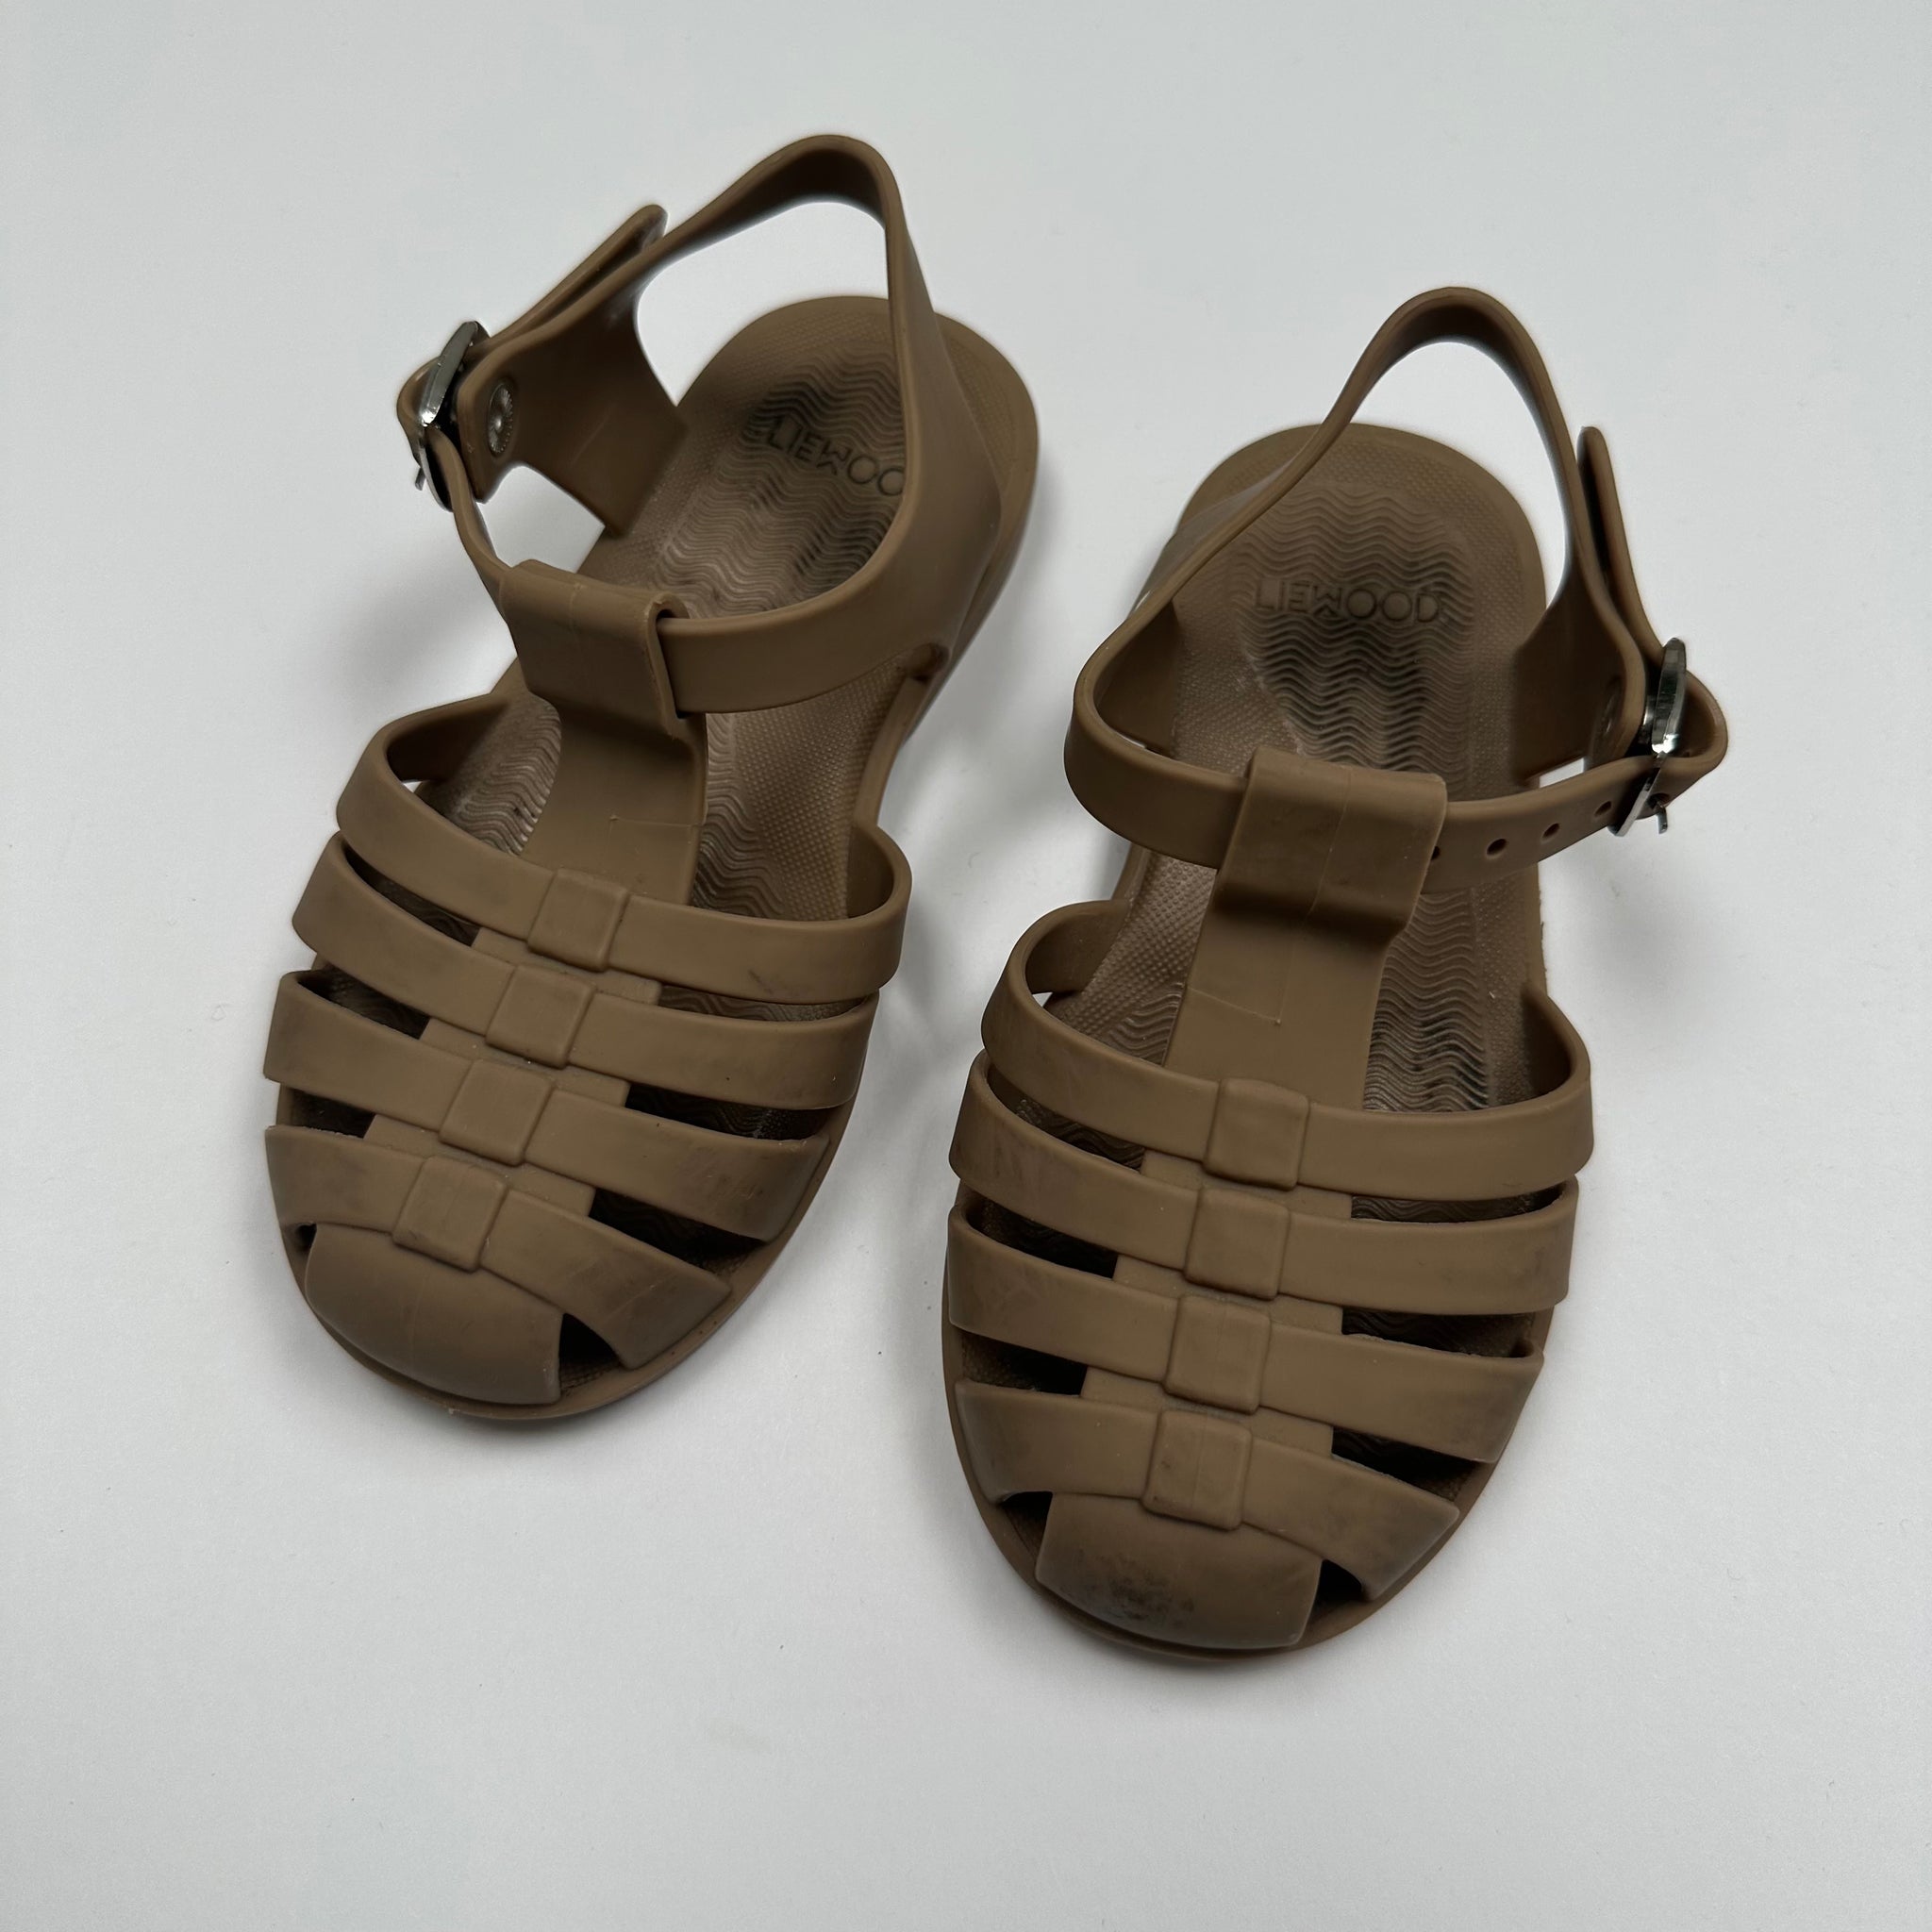 Liewood Sandals UK8.5